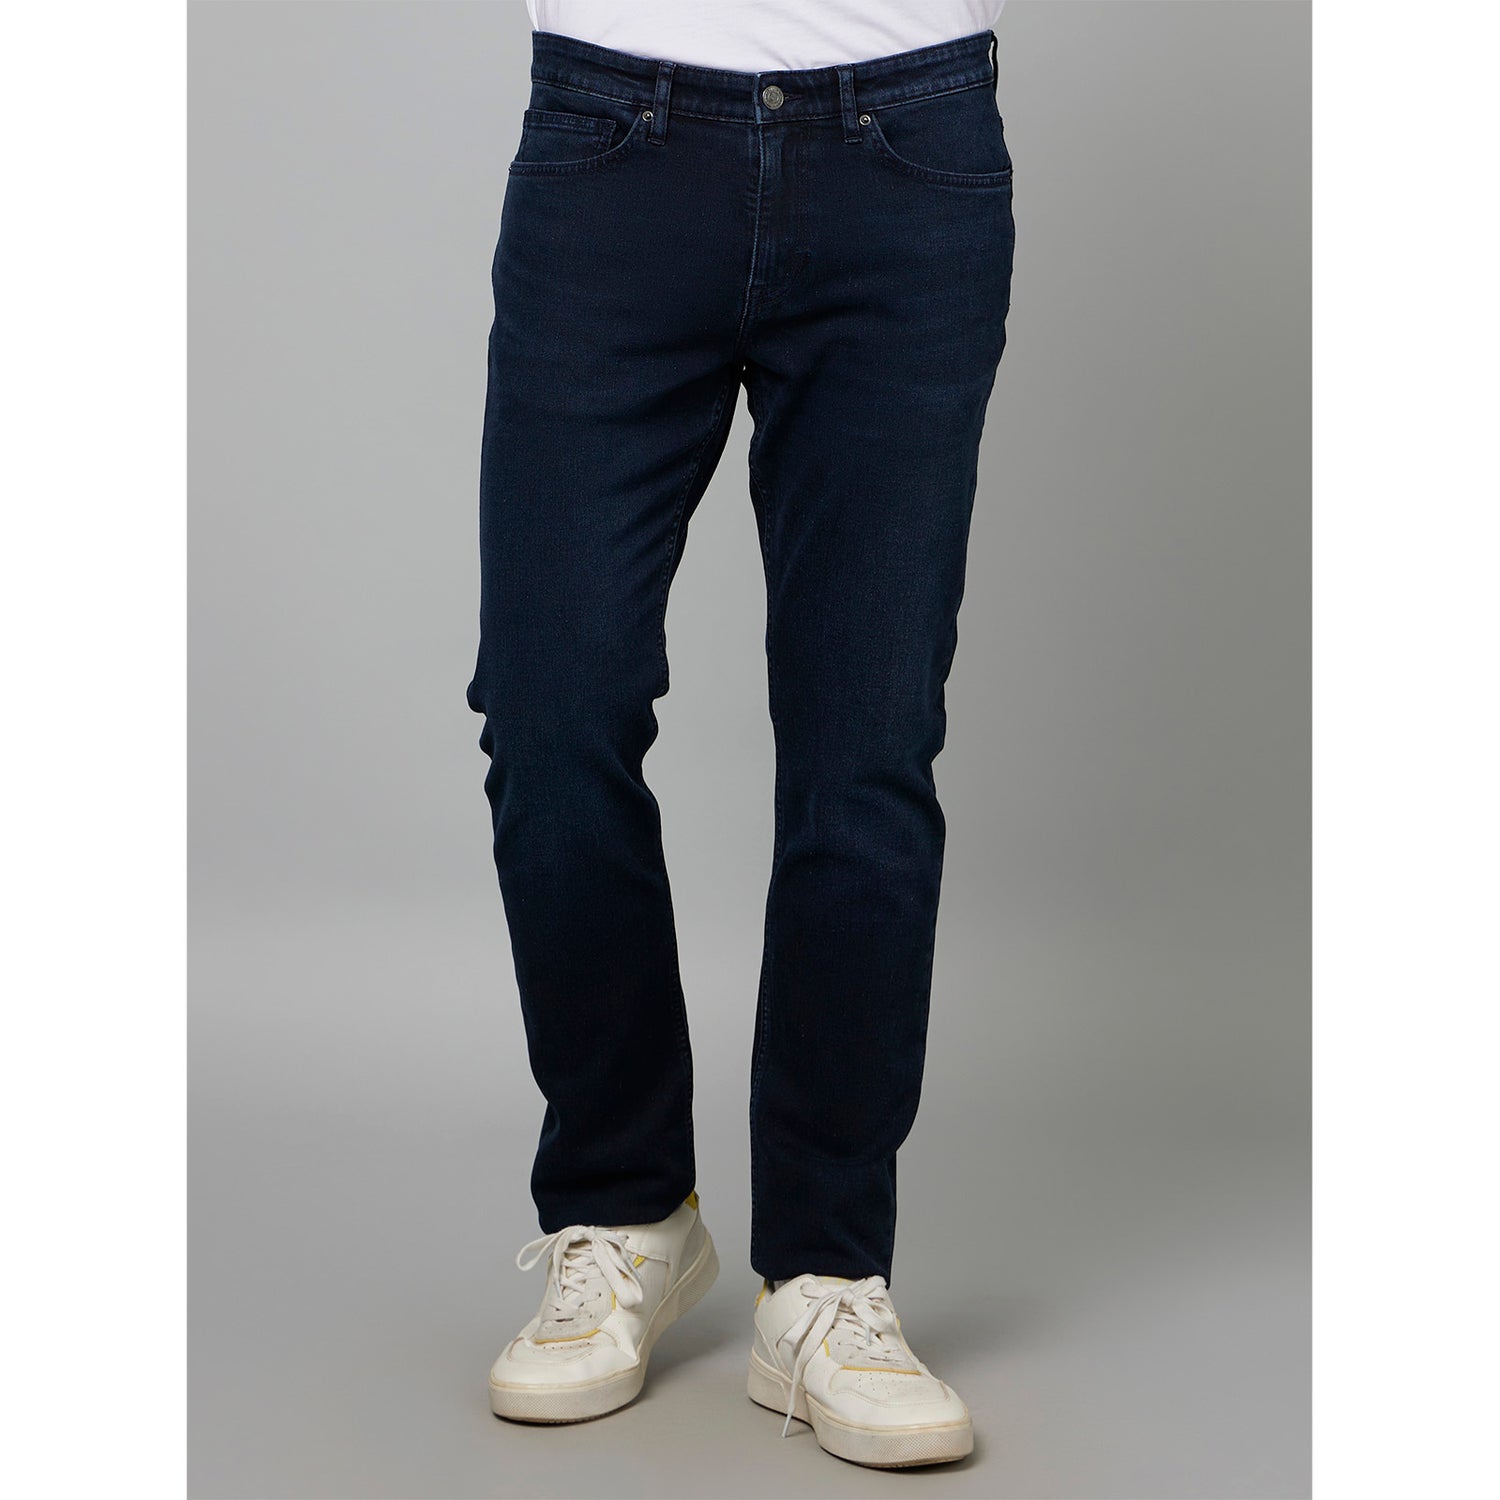 Blue Mid Rise Stretchable Cotton Jeans (FOTWILLSTL)